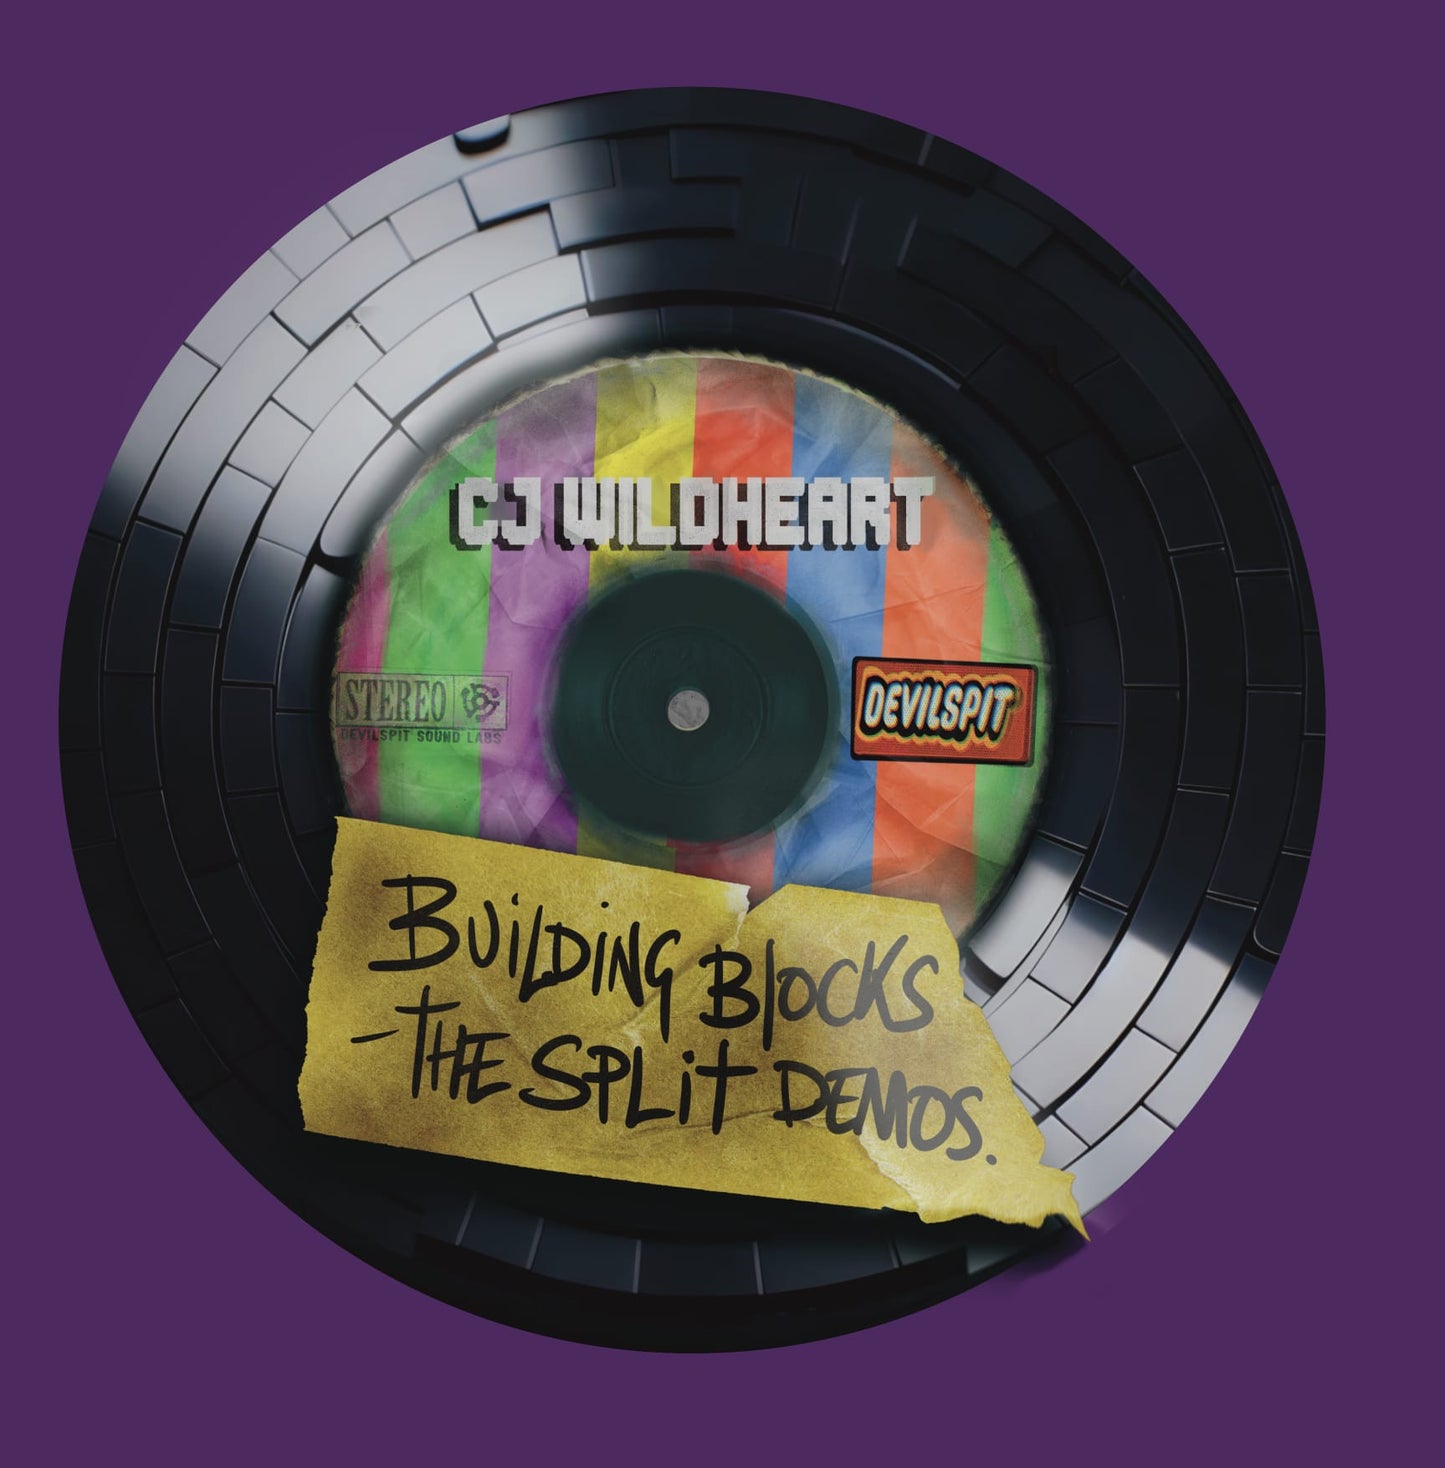 CJ Wildheart - The Building Blocks CD